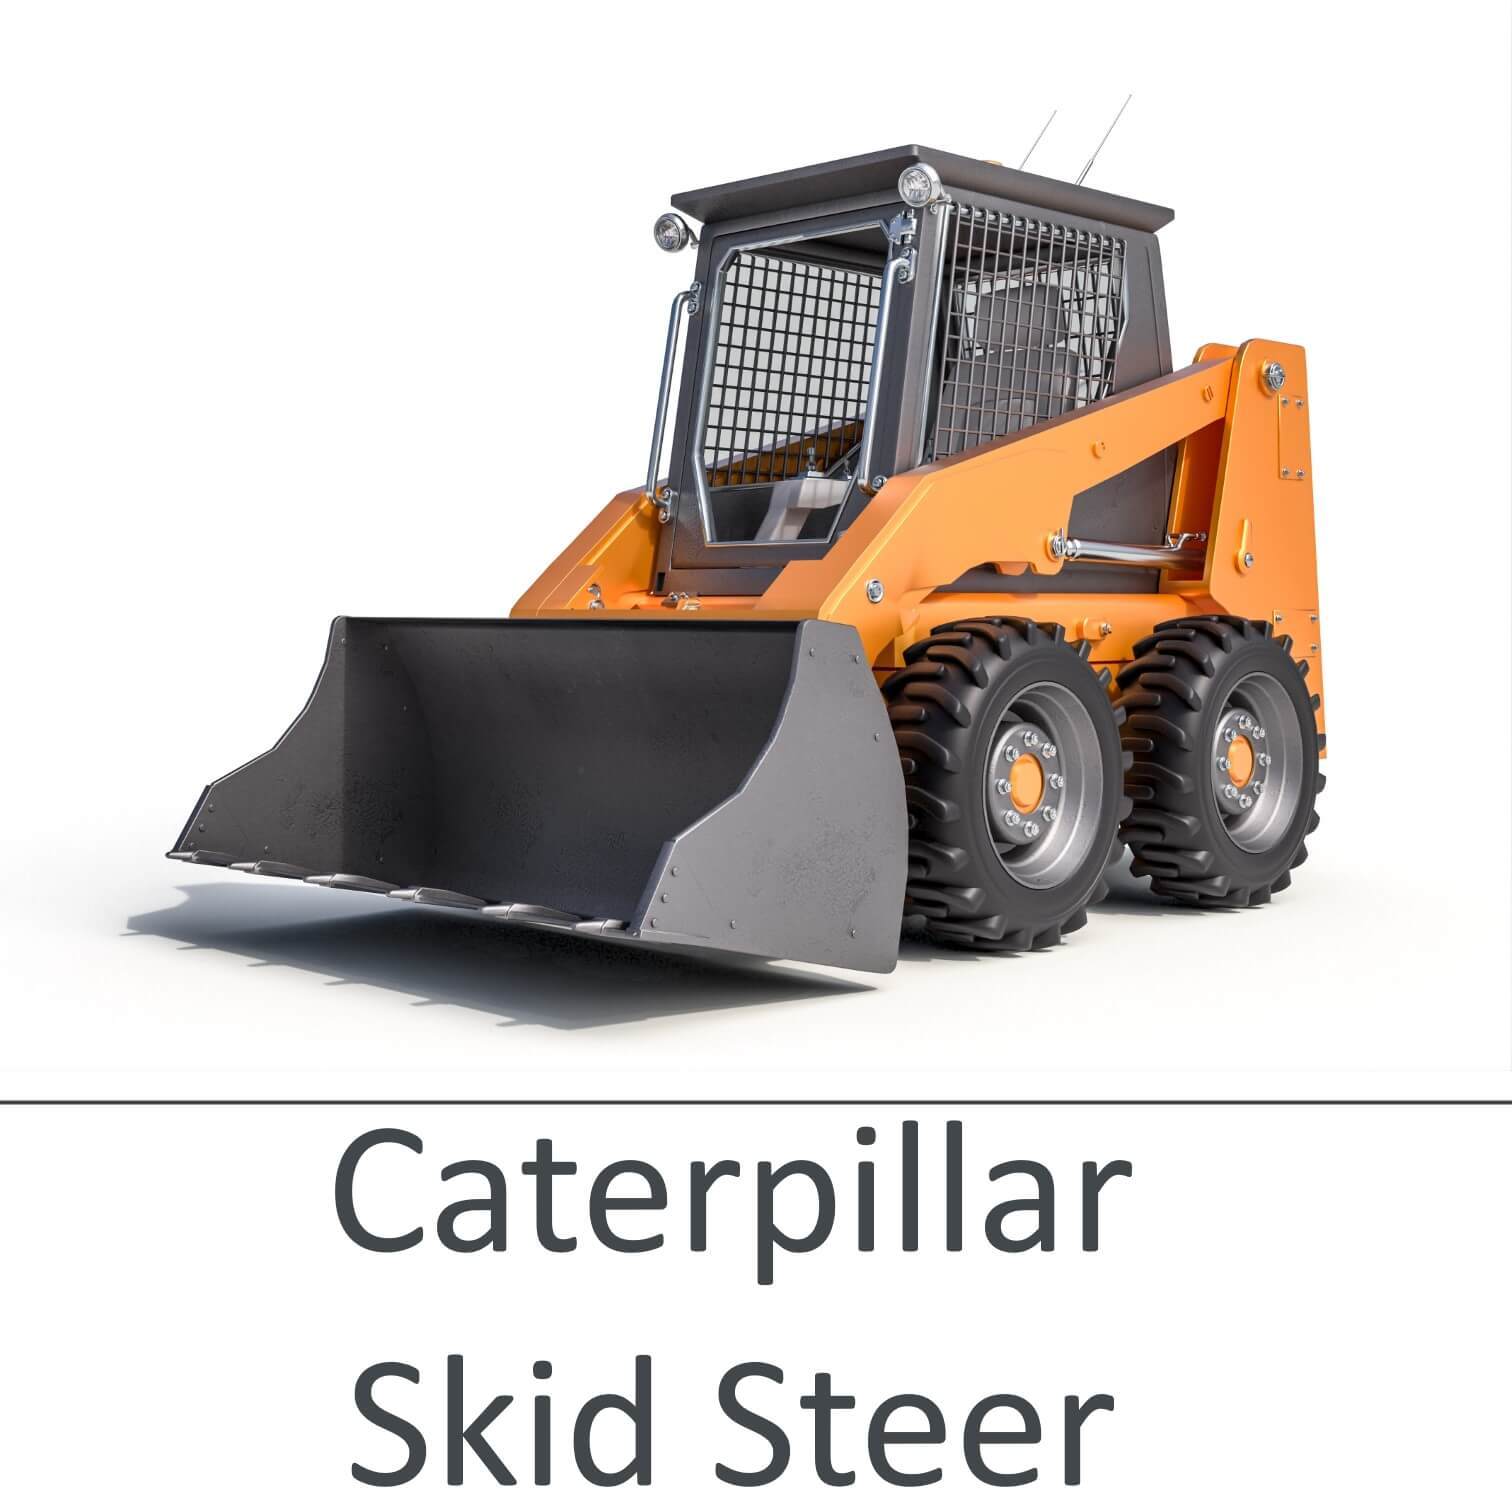 Caterpillar Skid Steer Parts